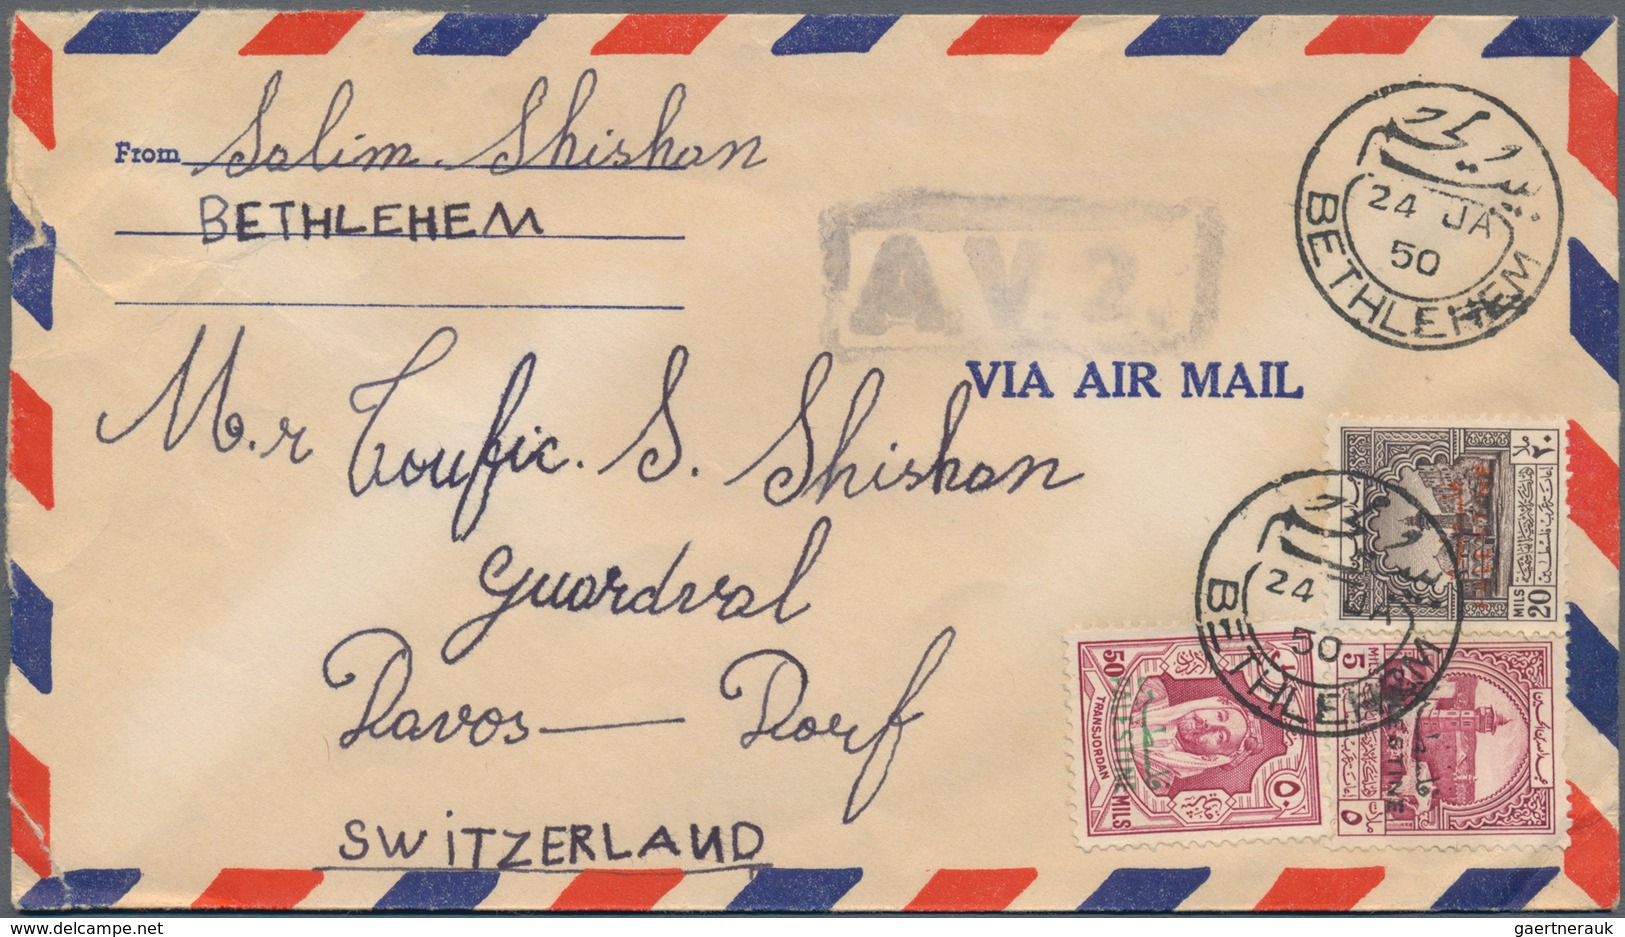 Jordanische Besetzung Palästina: 1950, Correspondence Of Covers (10, 9 By Airmail) From "BETHLEHEM" - Jordania